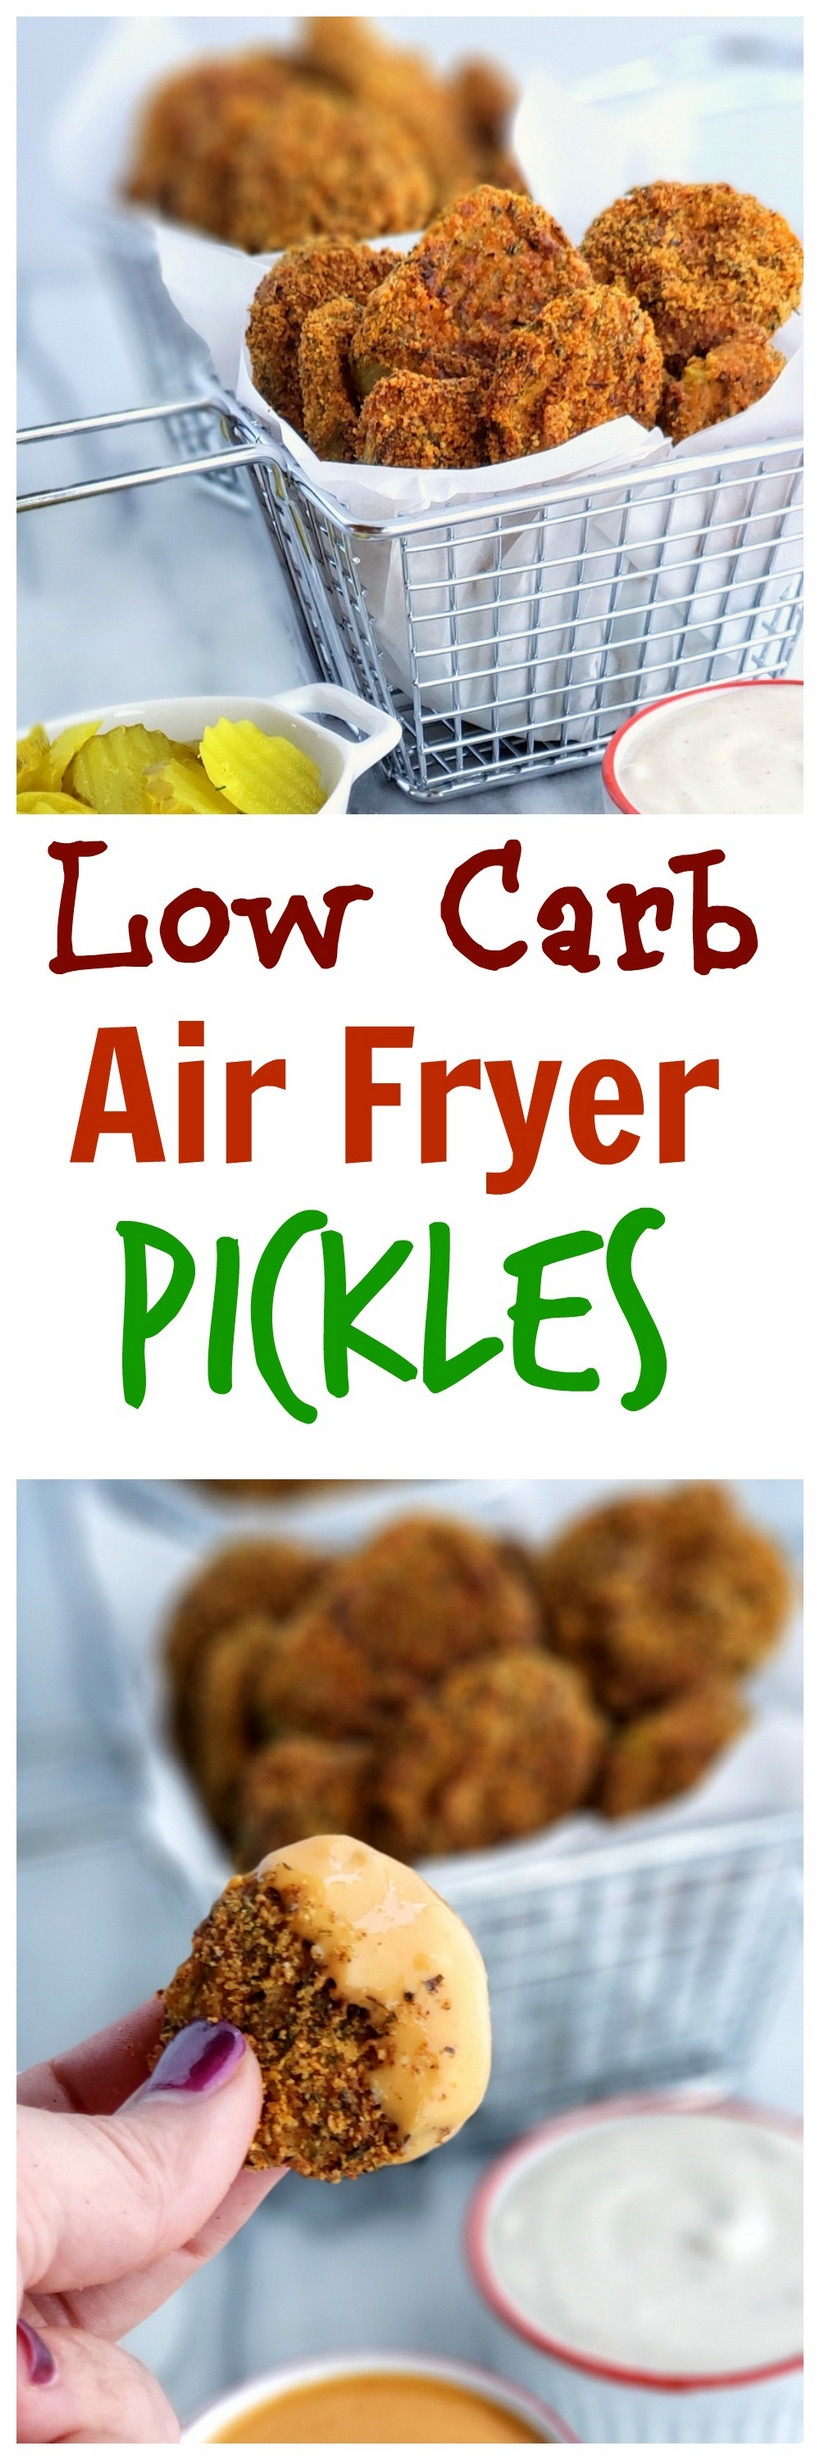 Air Fryer Recipes Low Carb
 Low Carb Air Fryer Pickles VIDEO